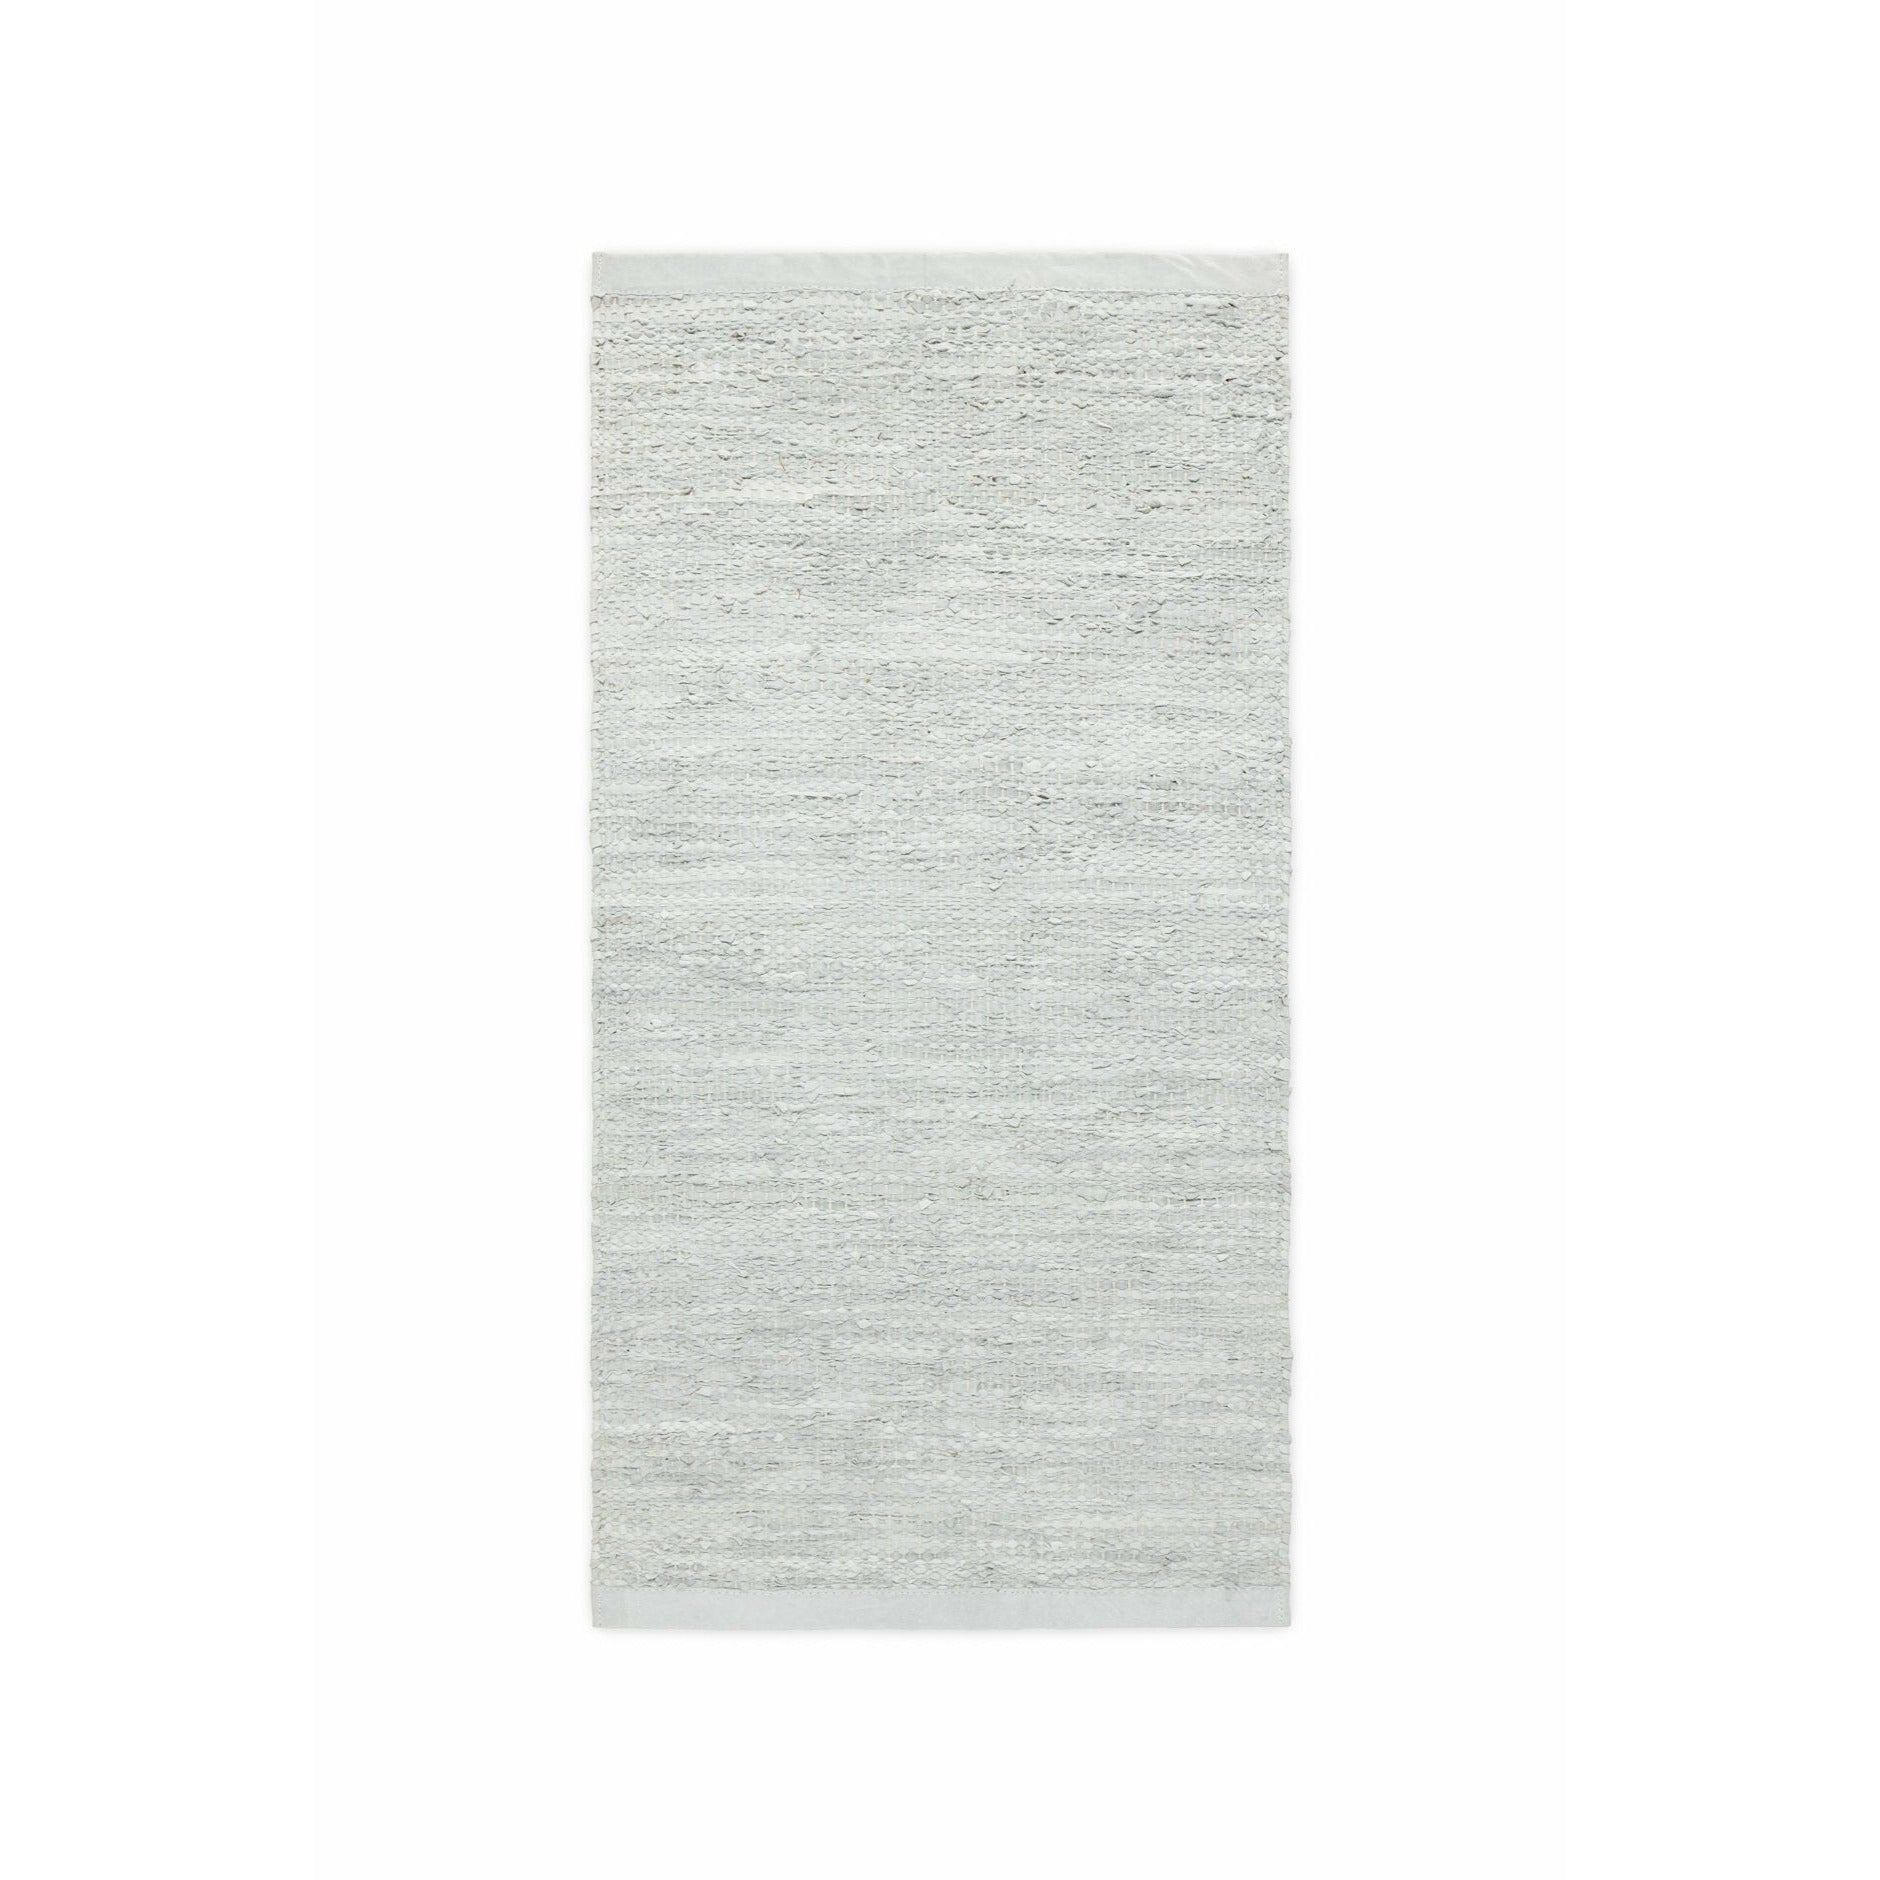 Teppet solid skinn tepp kalkstein, 250 x 350 cm